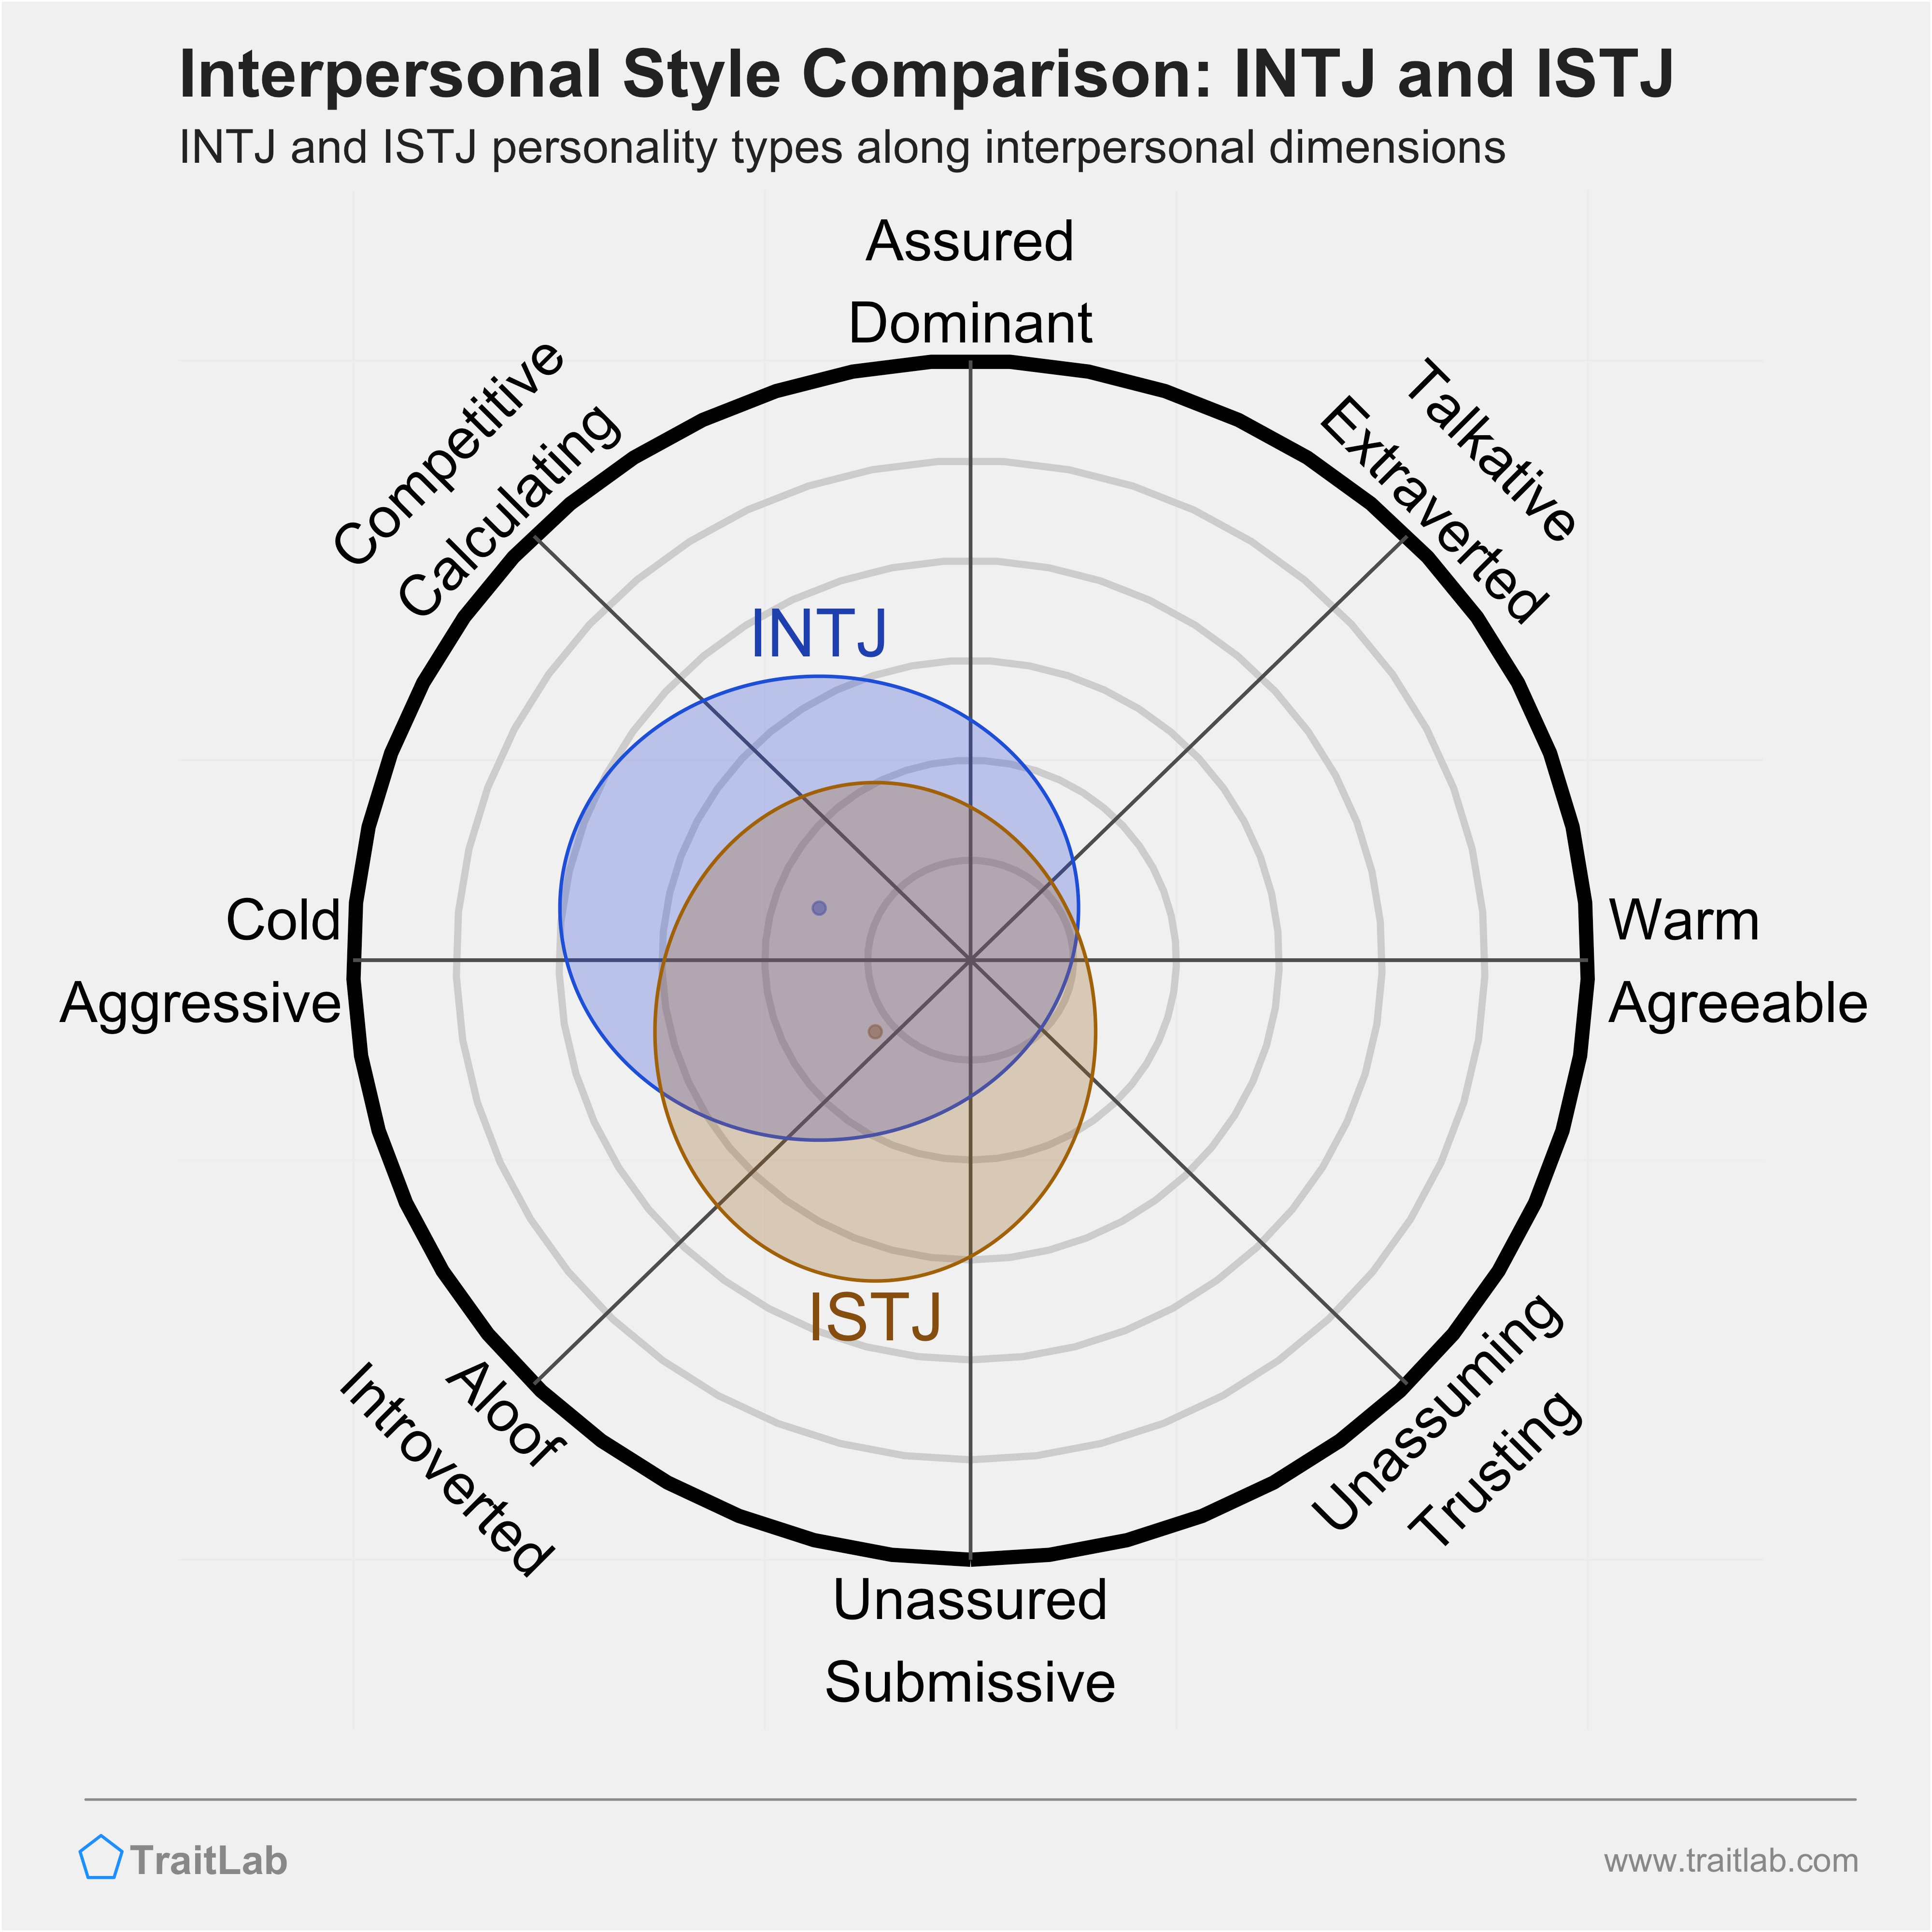 INTJ and ISTJ comparison across interpersonal dimensions